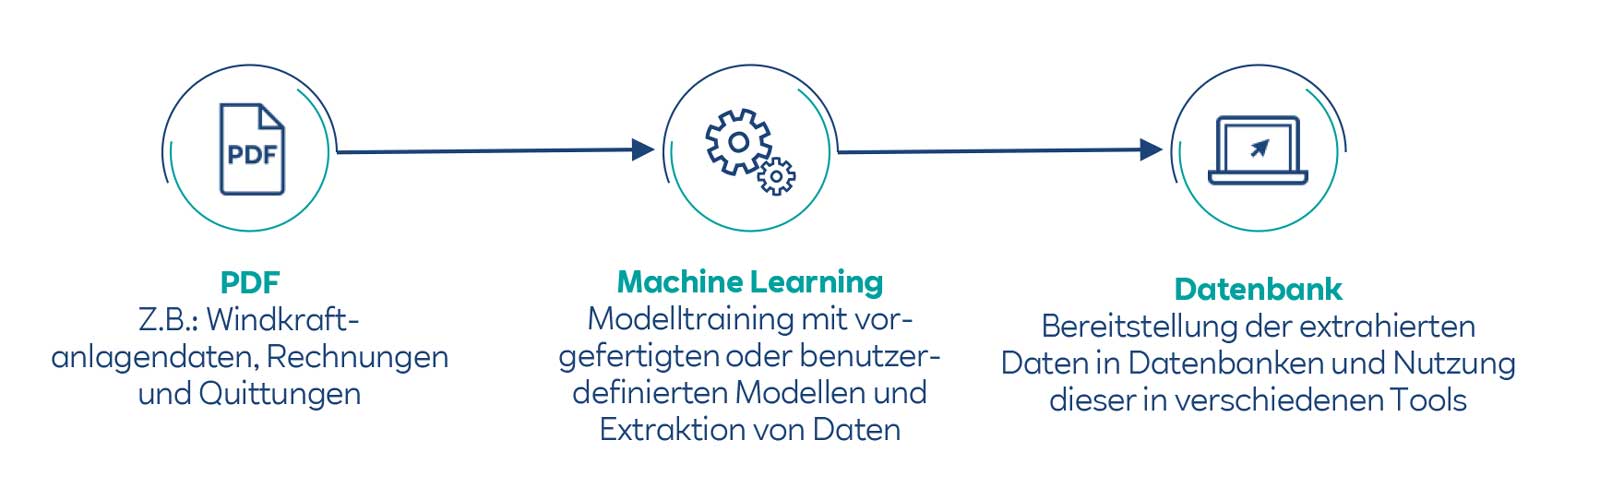 Machine Learning im Document Processing | Digitalisierung @ RWE